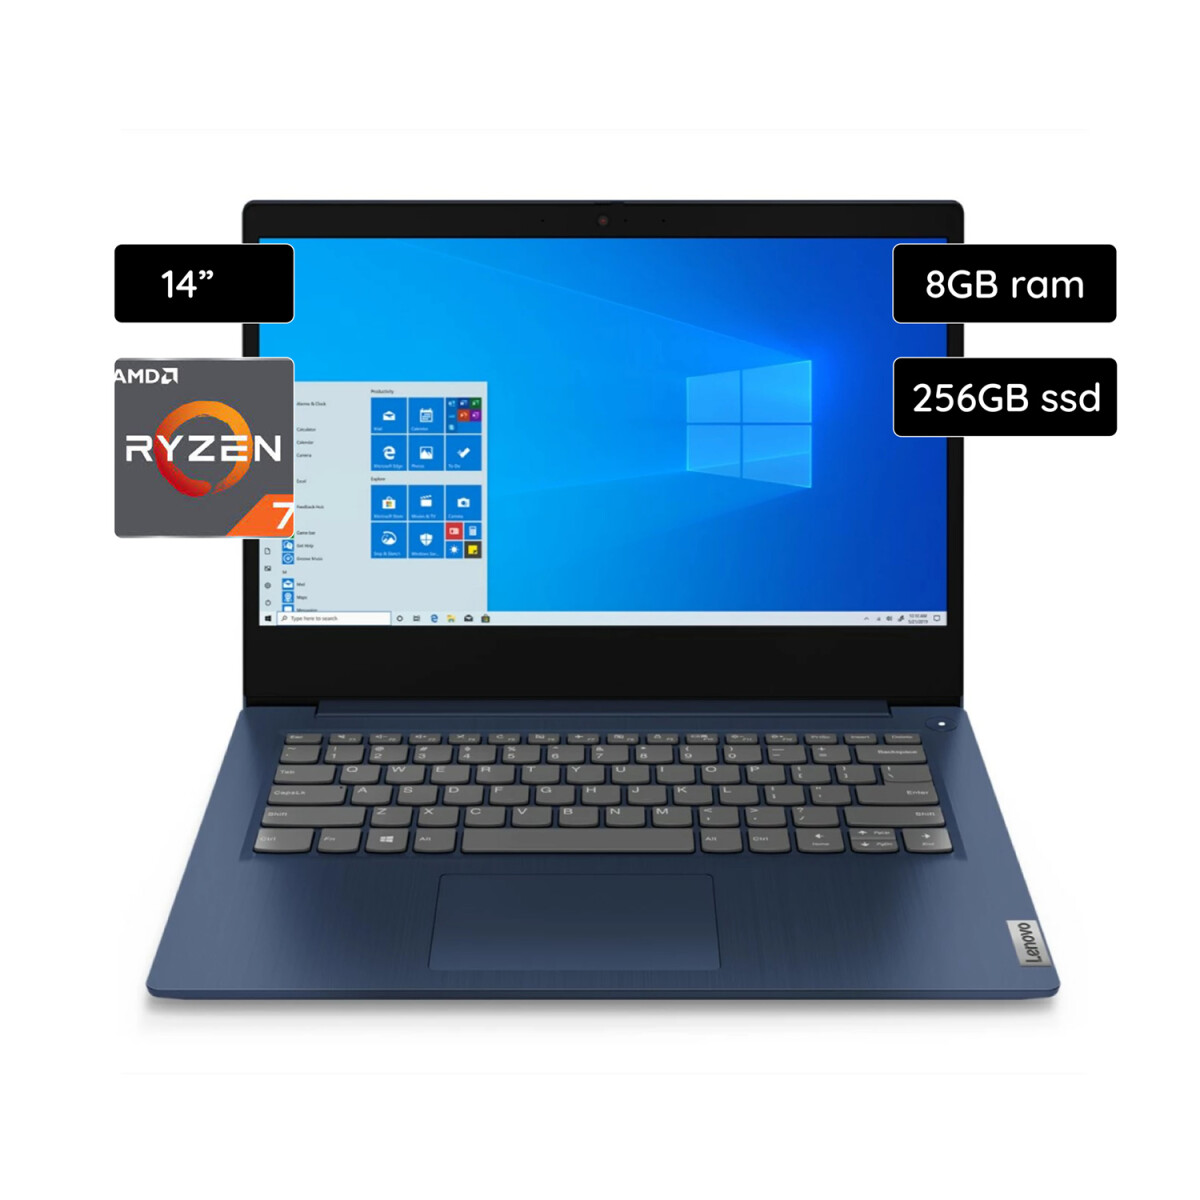 Notebook lenovo ideapad 5 14' 256gb ssd / 8gb ram ryzen 7 5700u - Abyss blue 